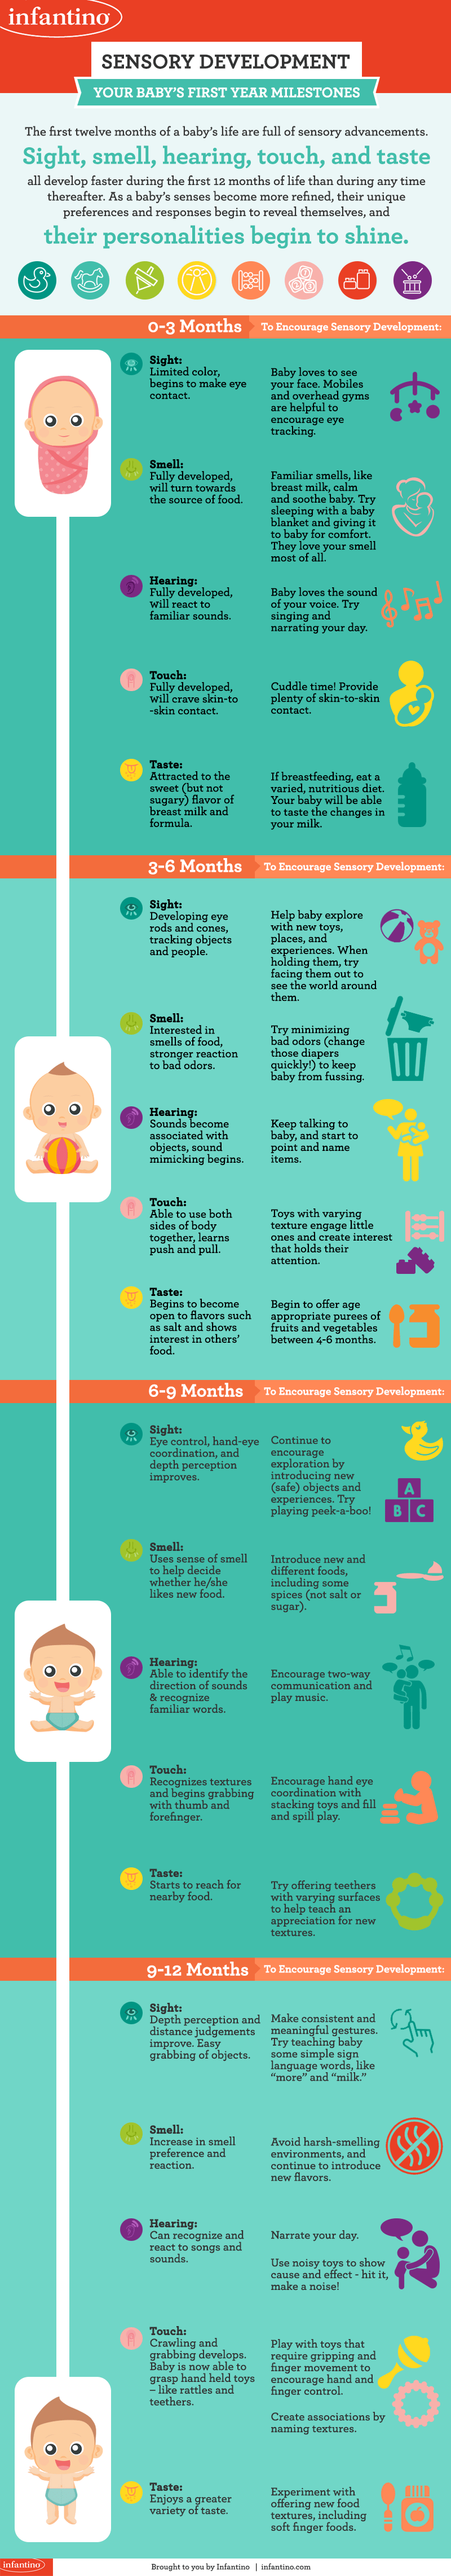 Sensory Development Infographic | Baby Chick